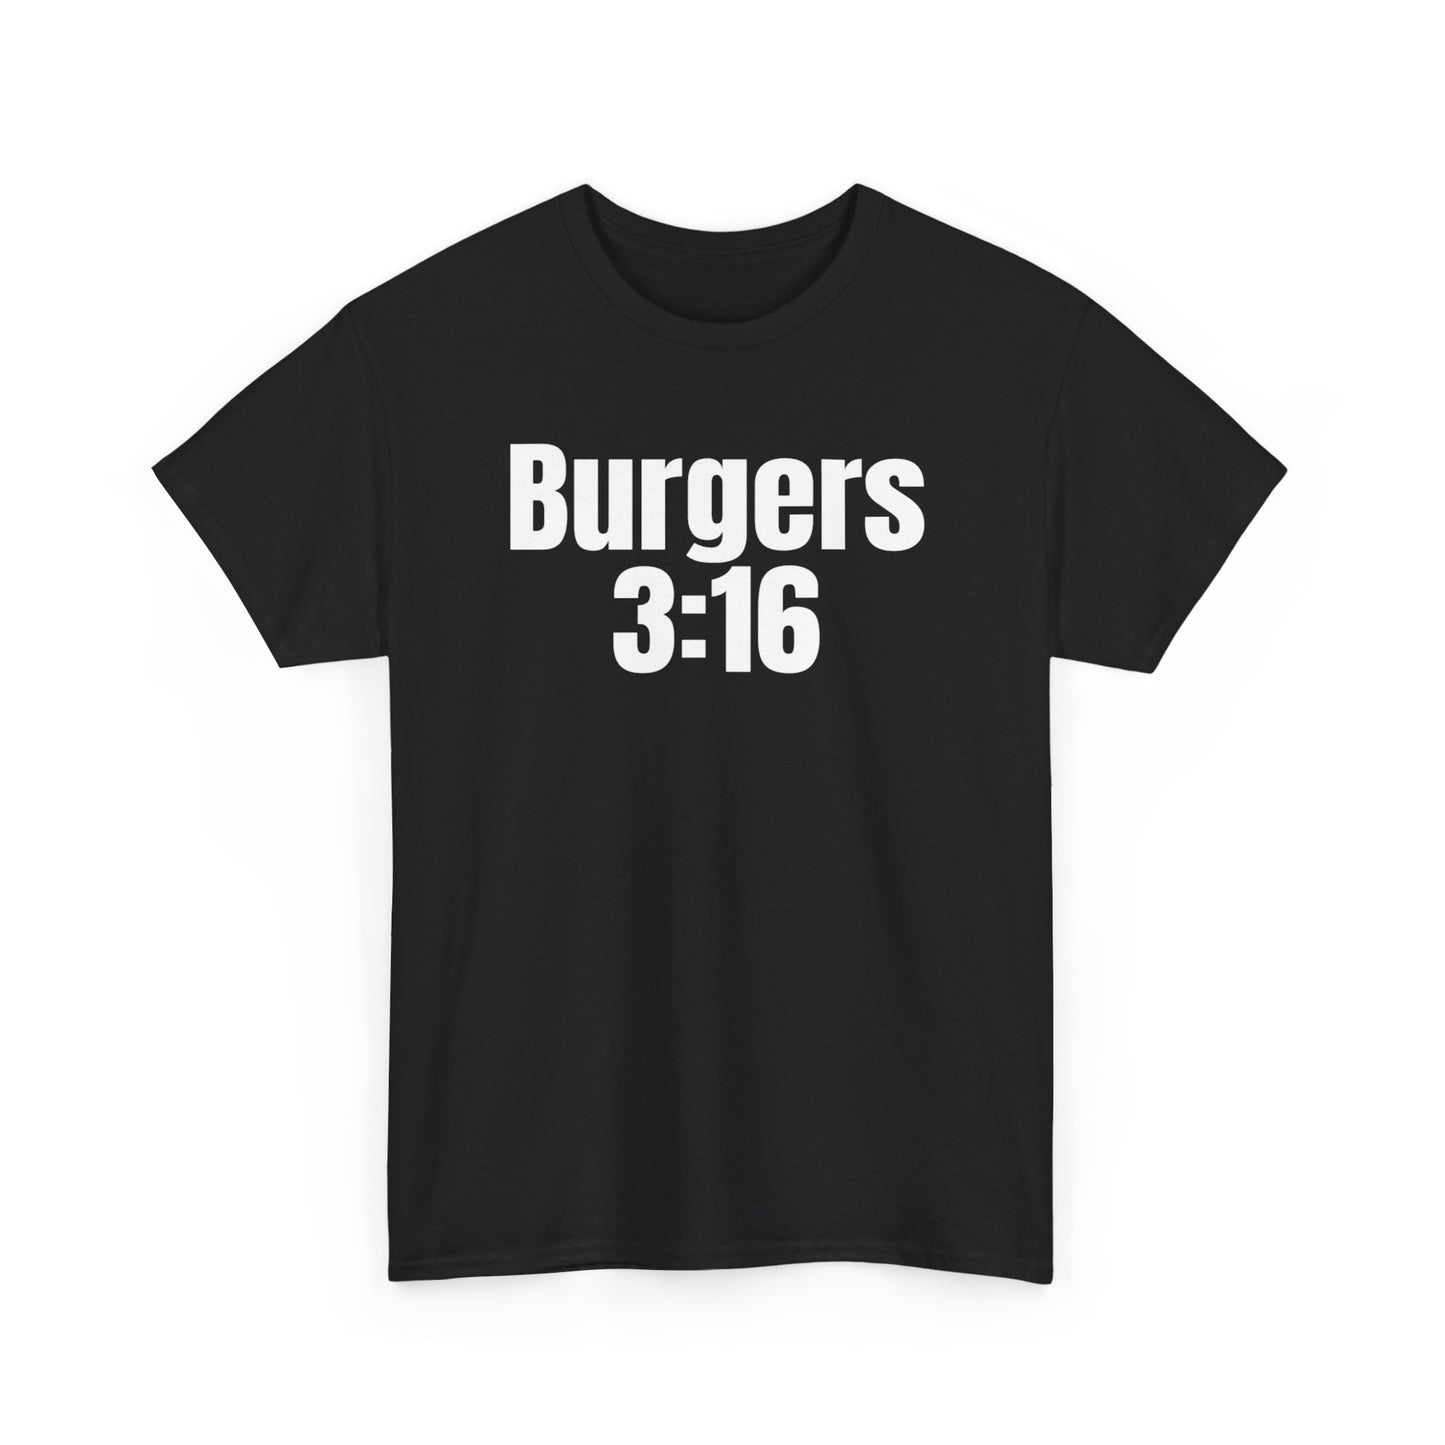 Burgers 3:16